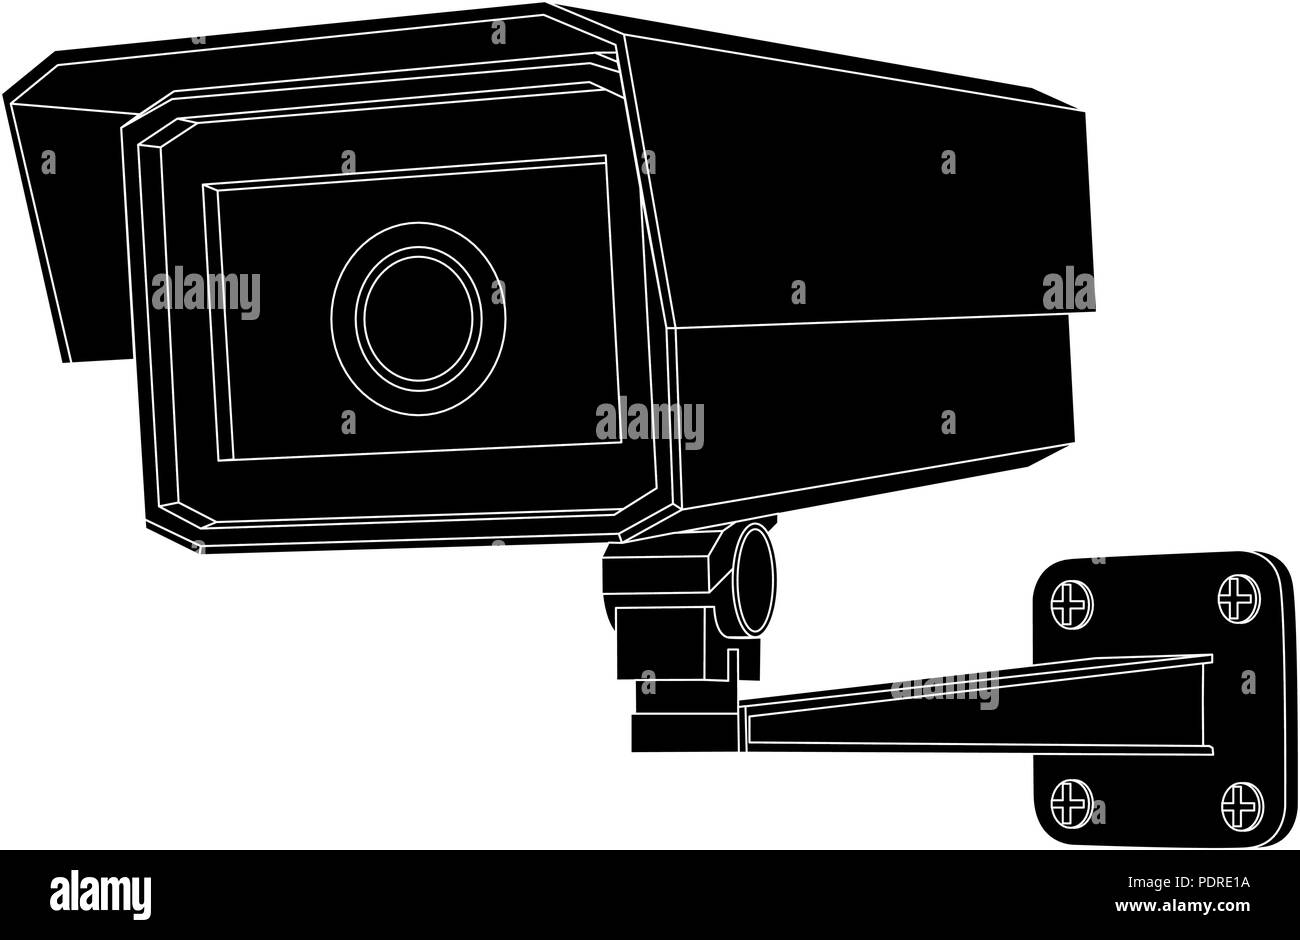 CCTV security camera. Black outline illustration Stock Vector